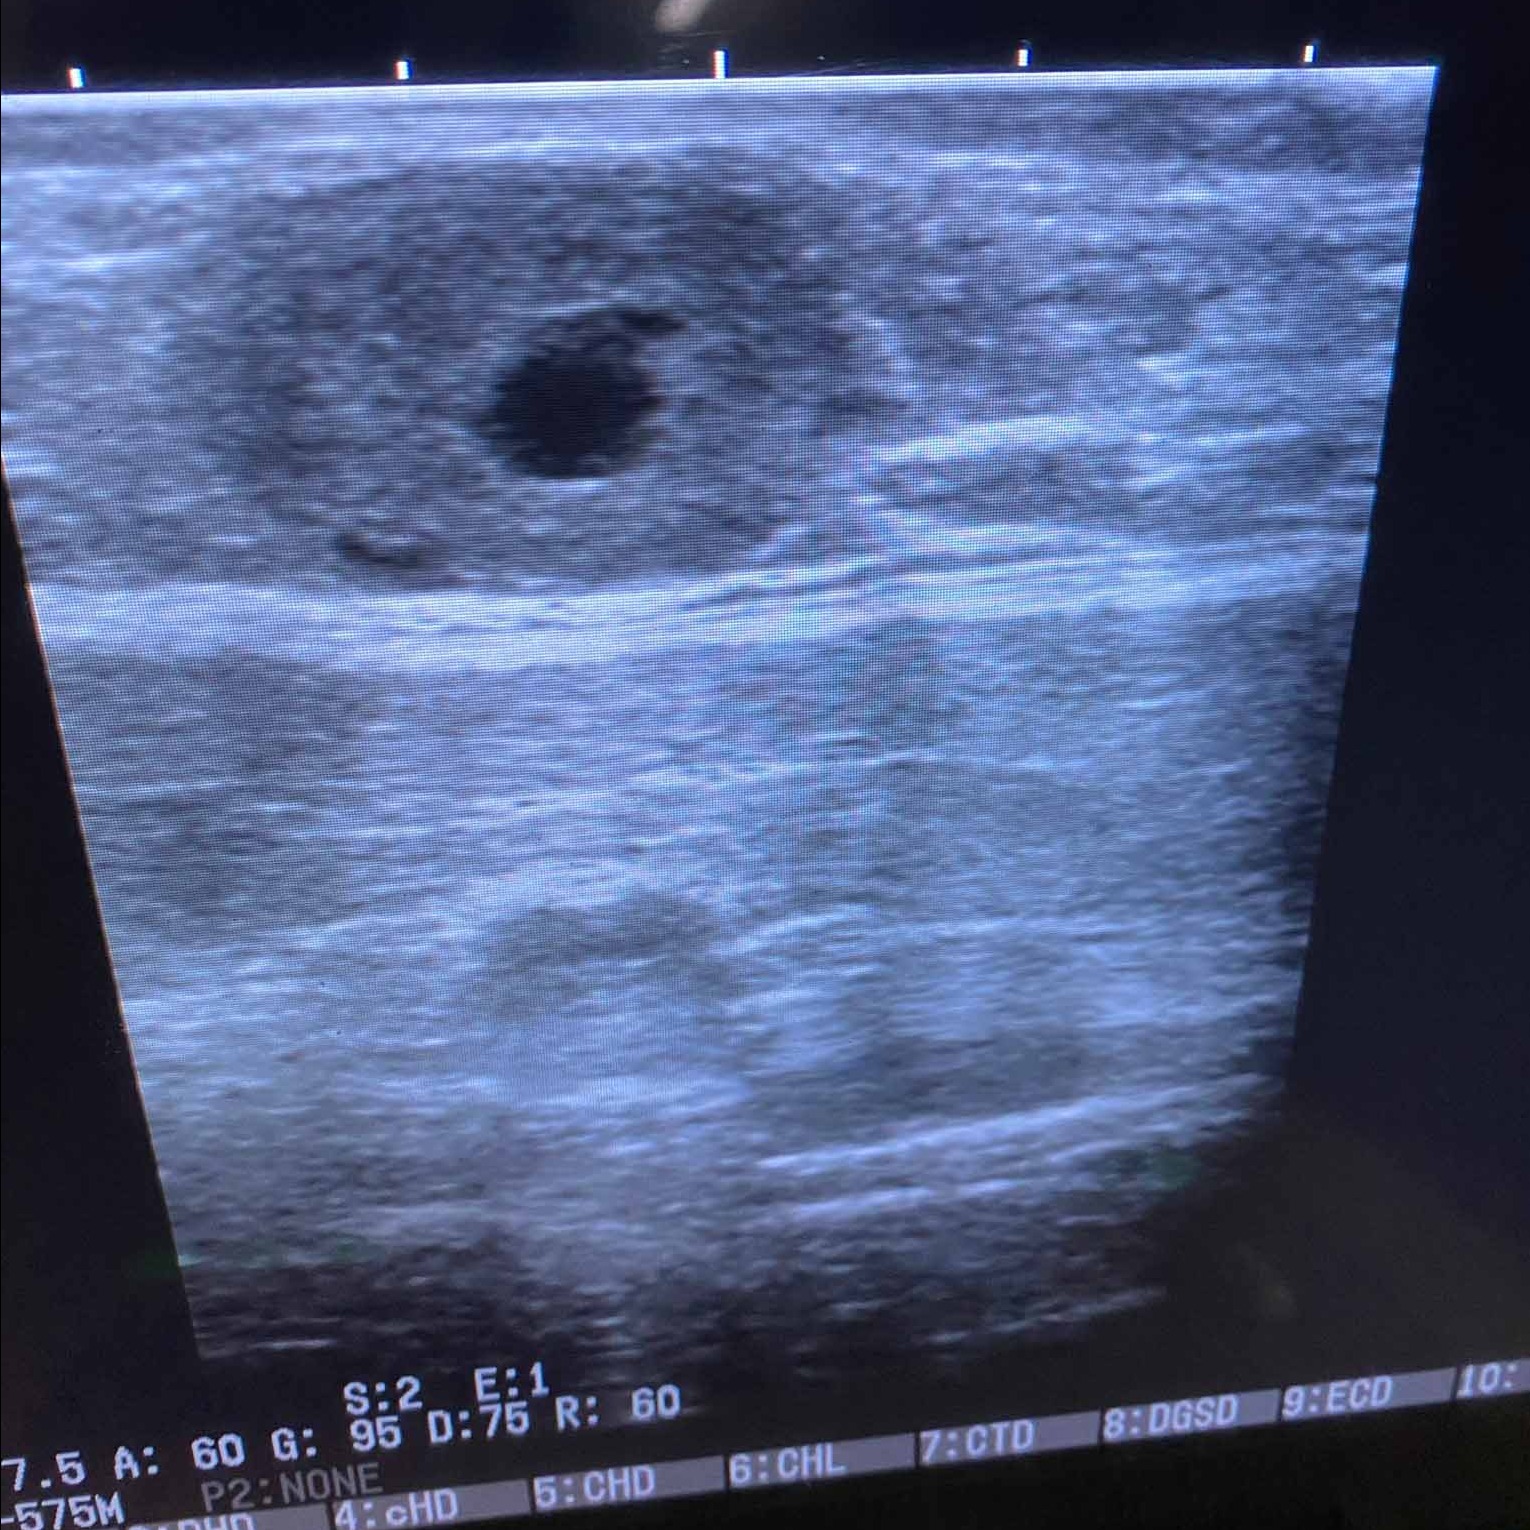 Ultrasound image of a female heifer's ovaries